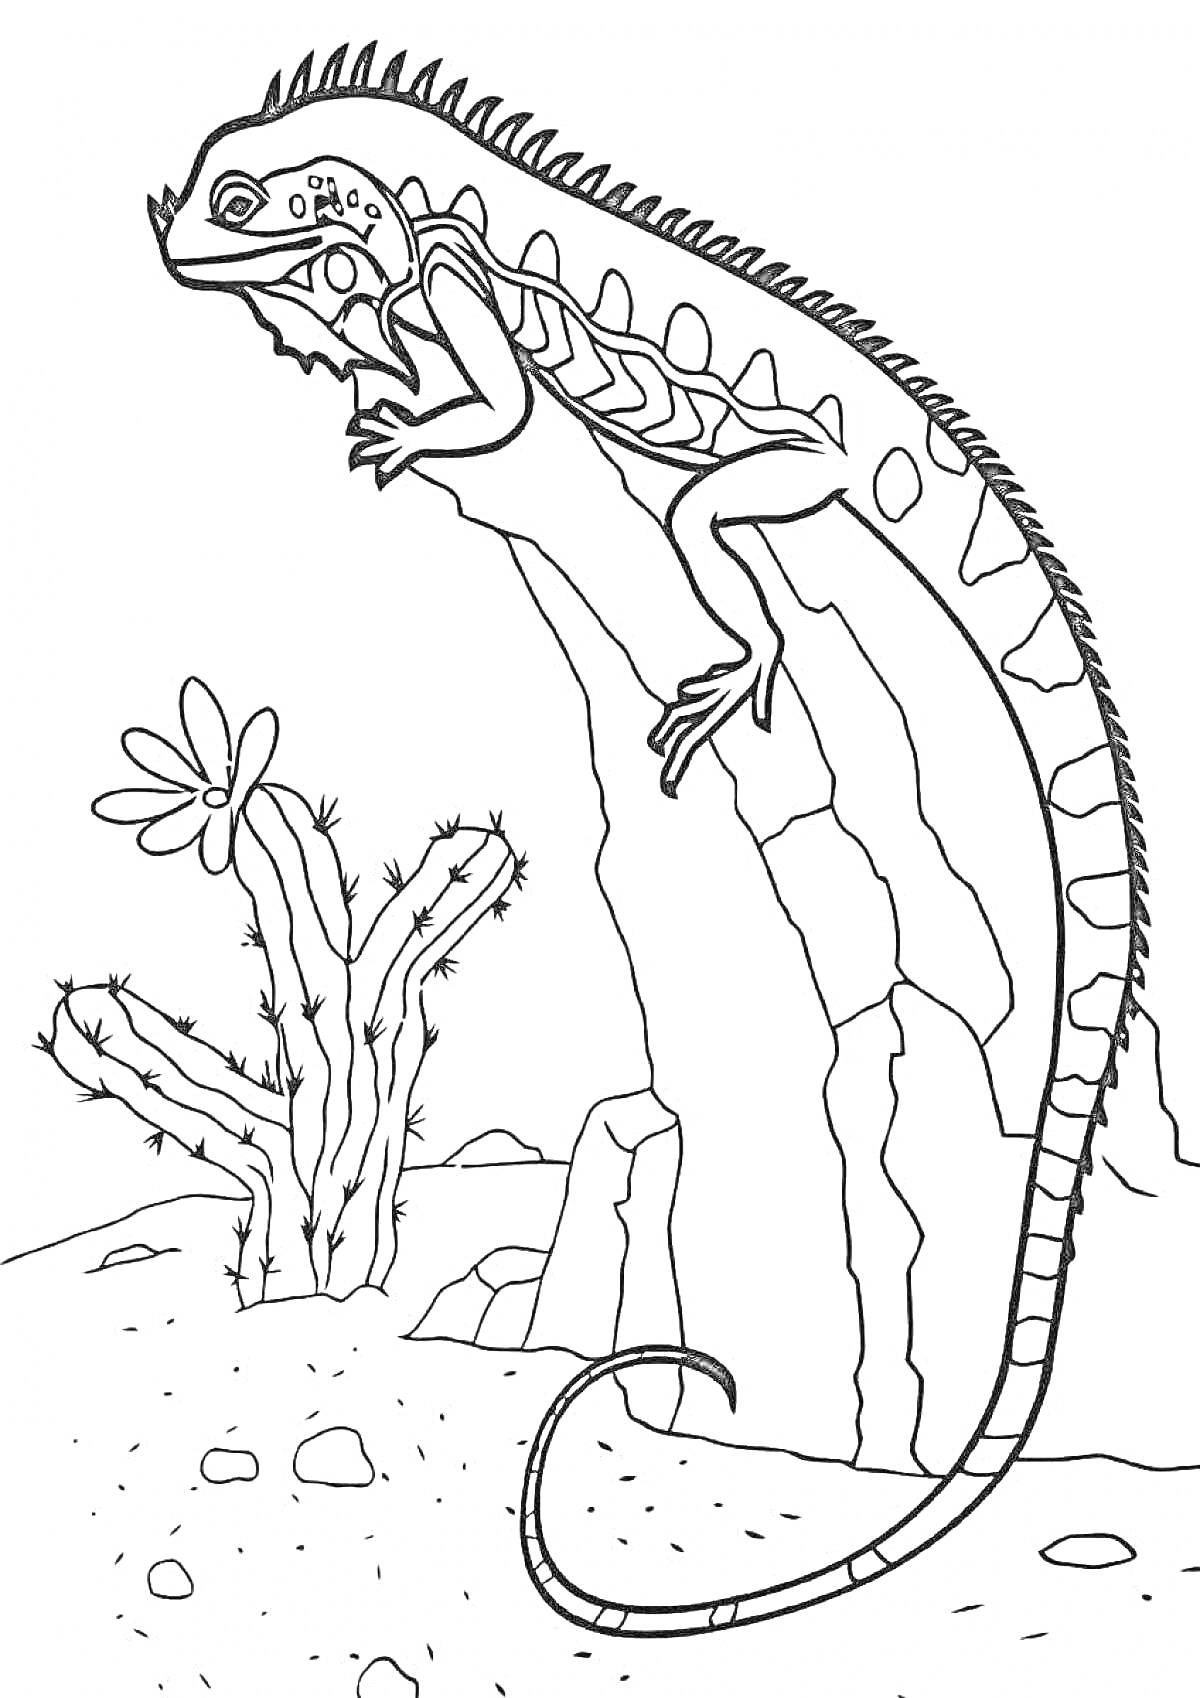 Раскраска Плащеносная ящерица на камне с кактусом на фоне